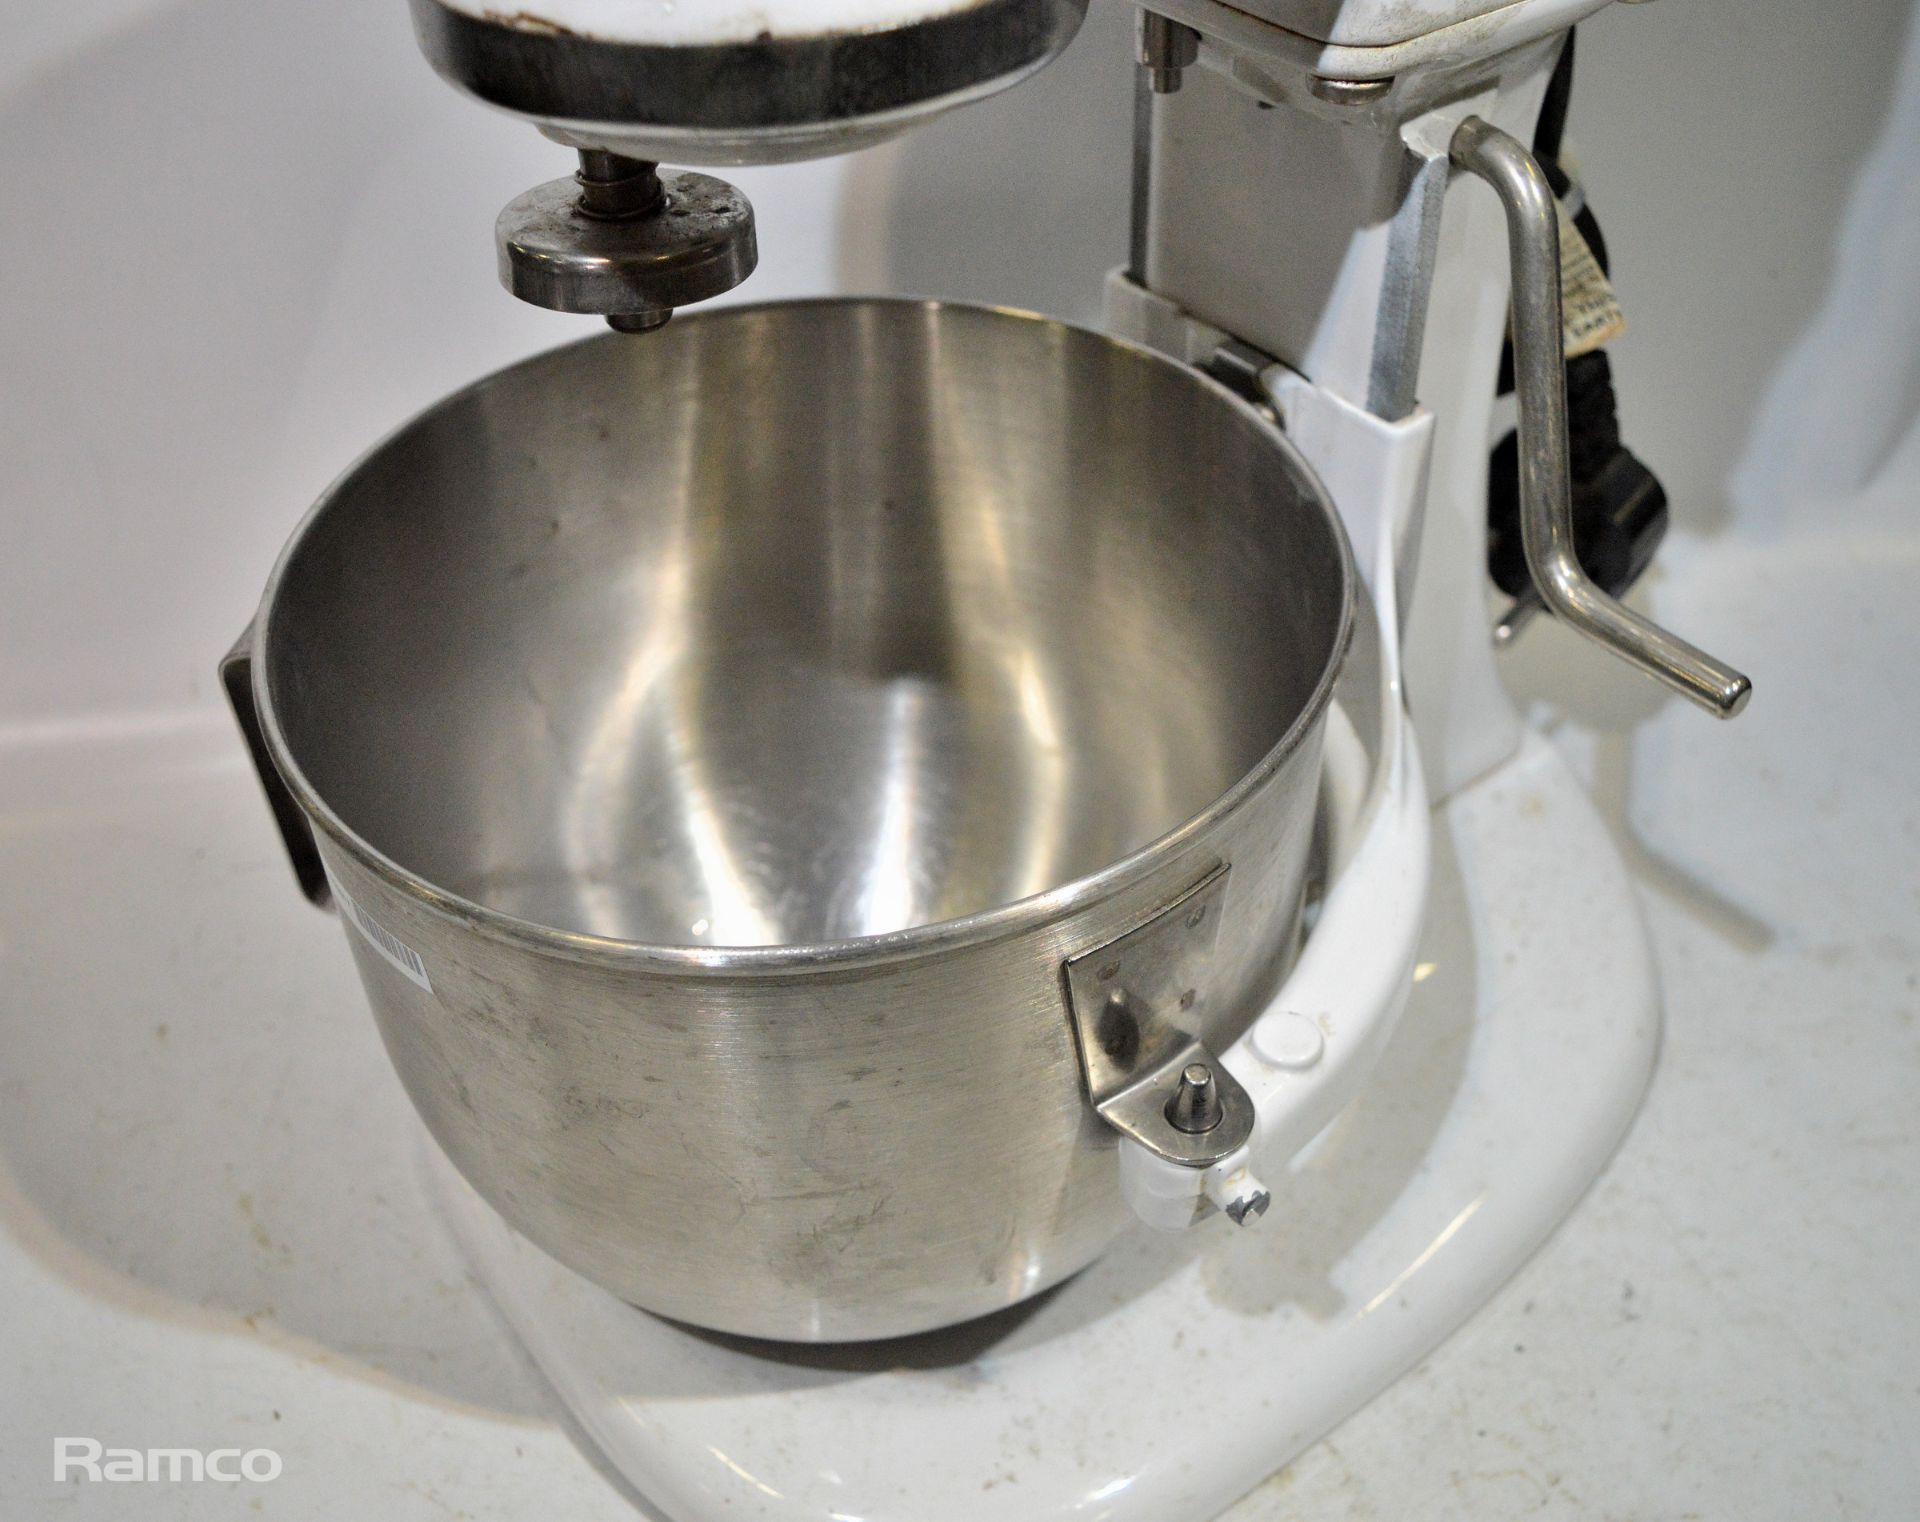 KitchenAid Pro KPM50 food mixer 230v - Image 3 of 6